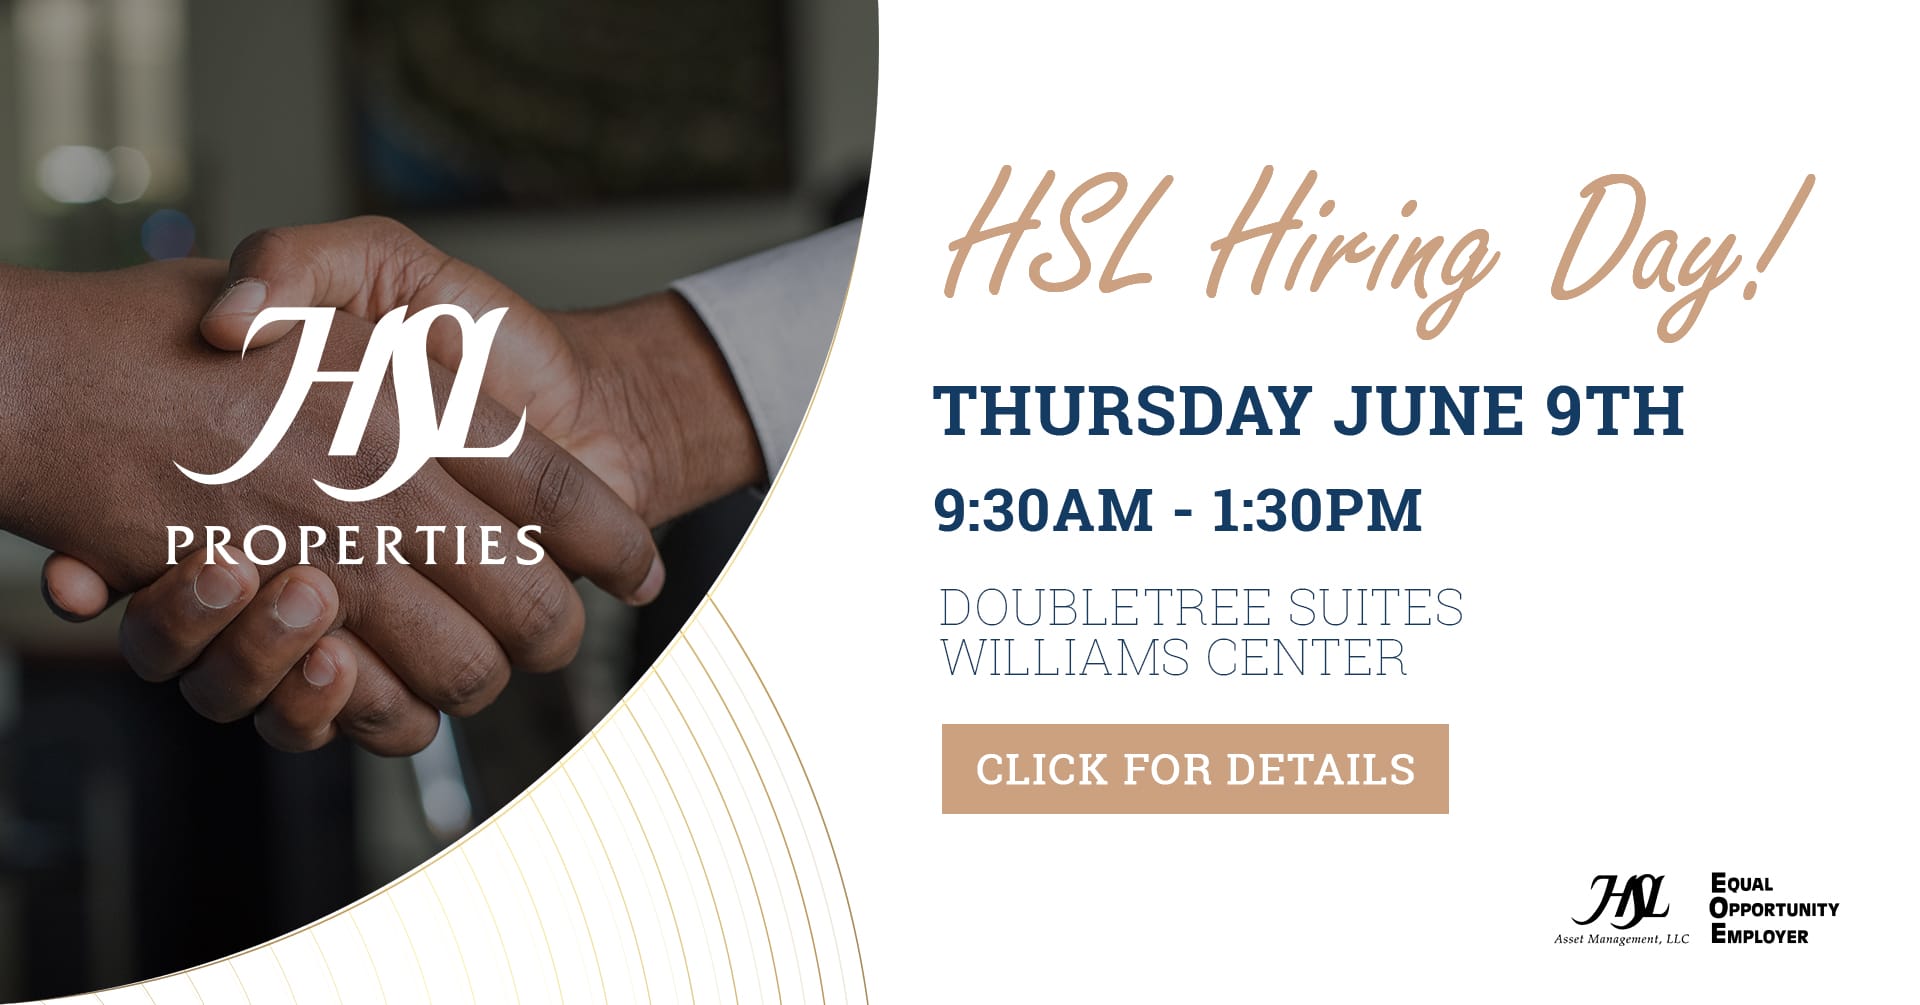 HSL Hiring Day Thursday June 9th, 2022